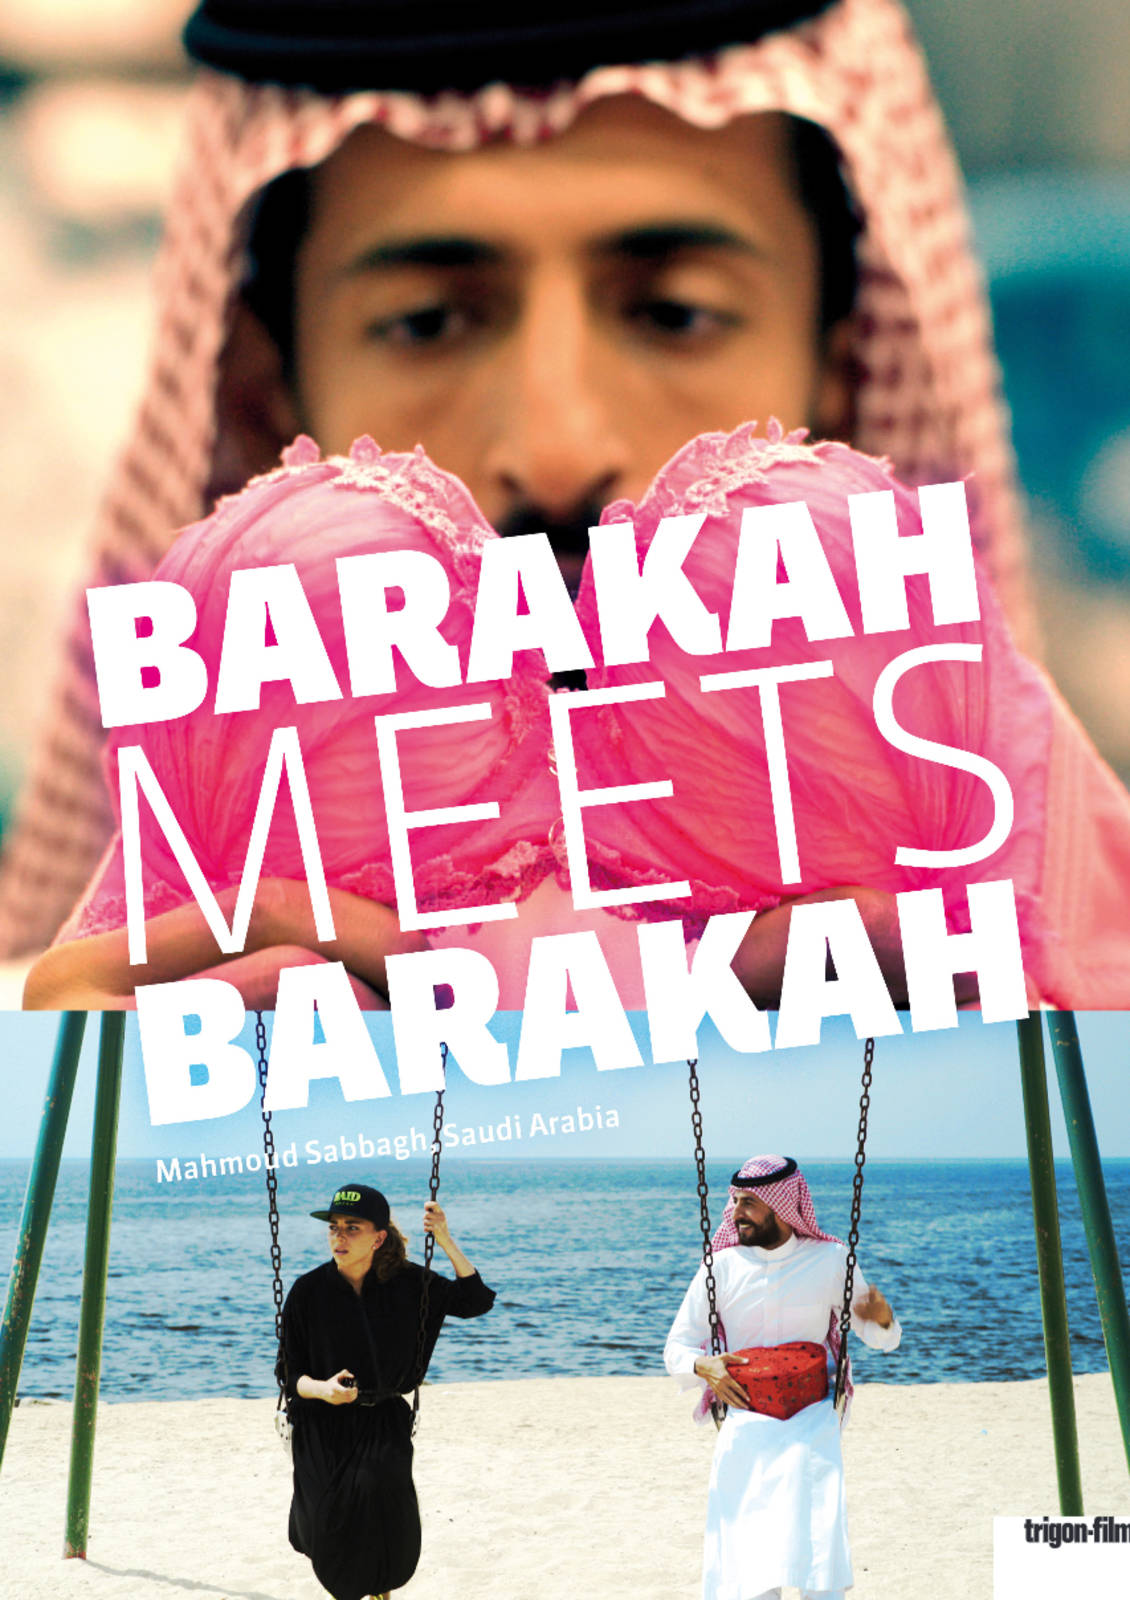 Plakat Liebeskomödie "Barakh meets Barakah" 